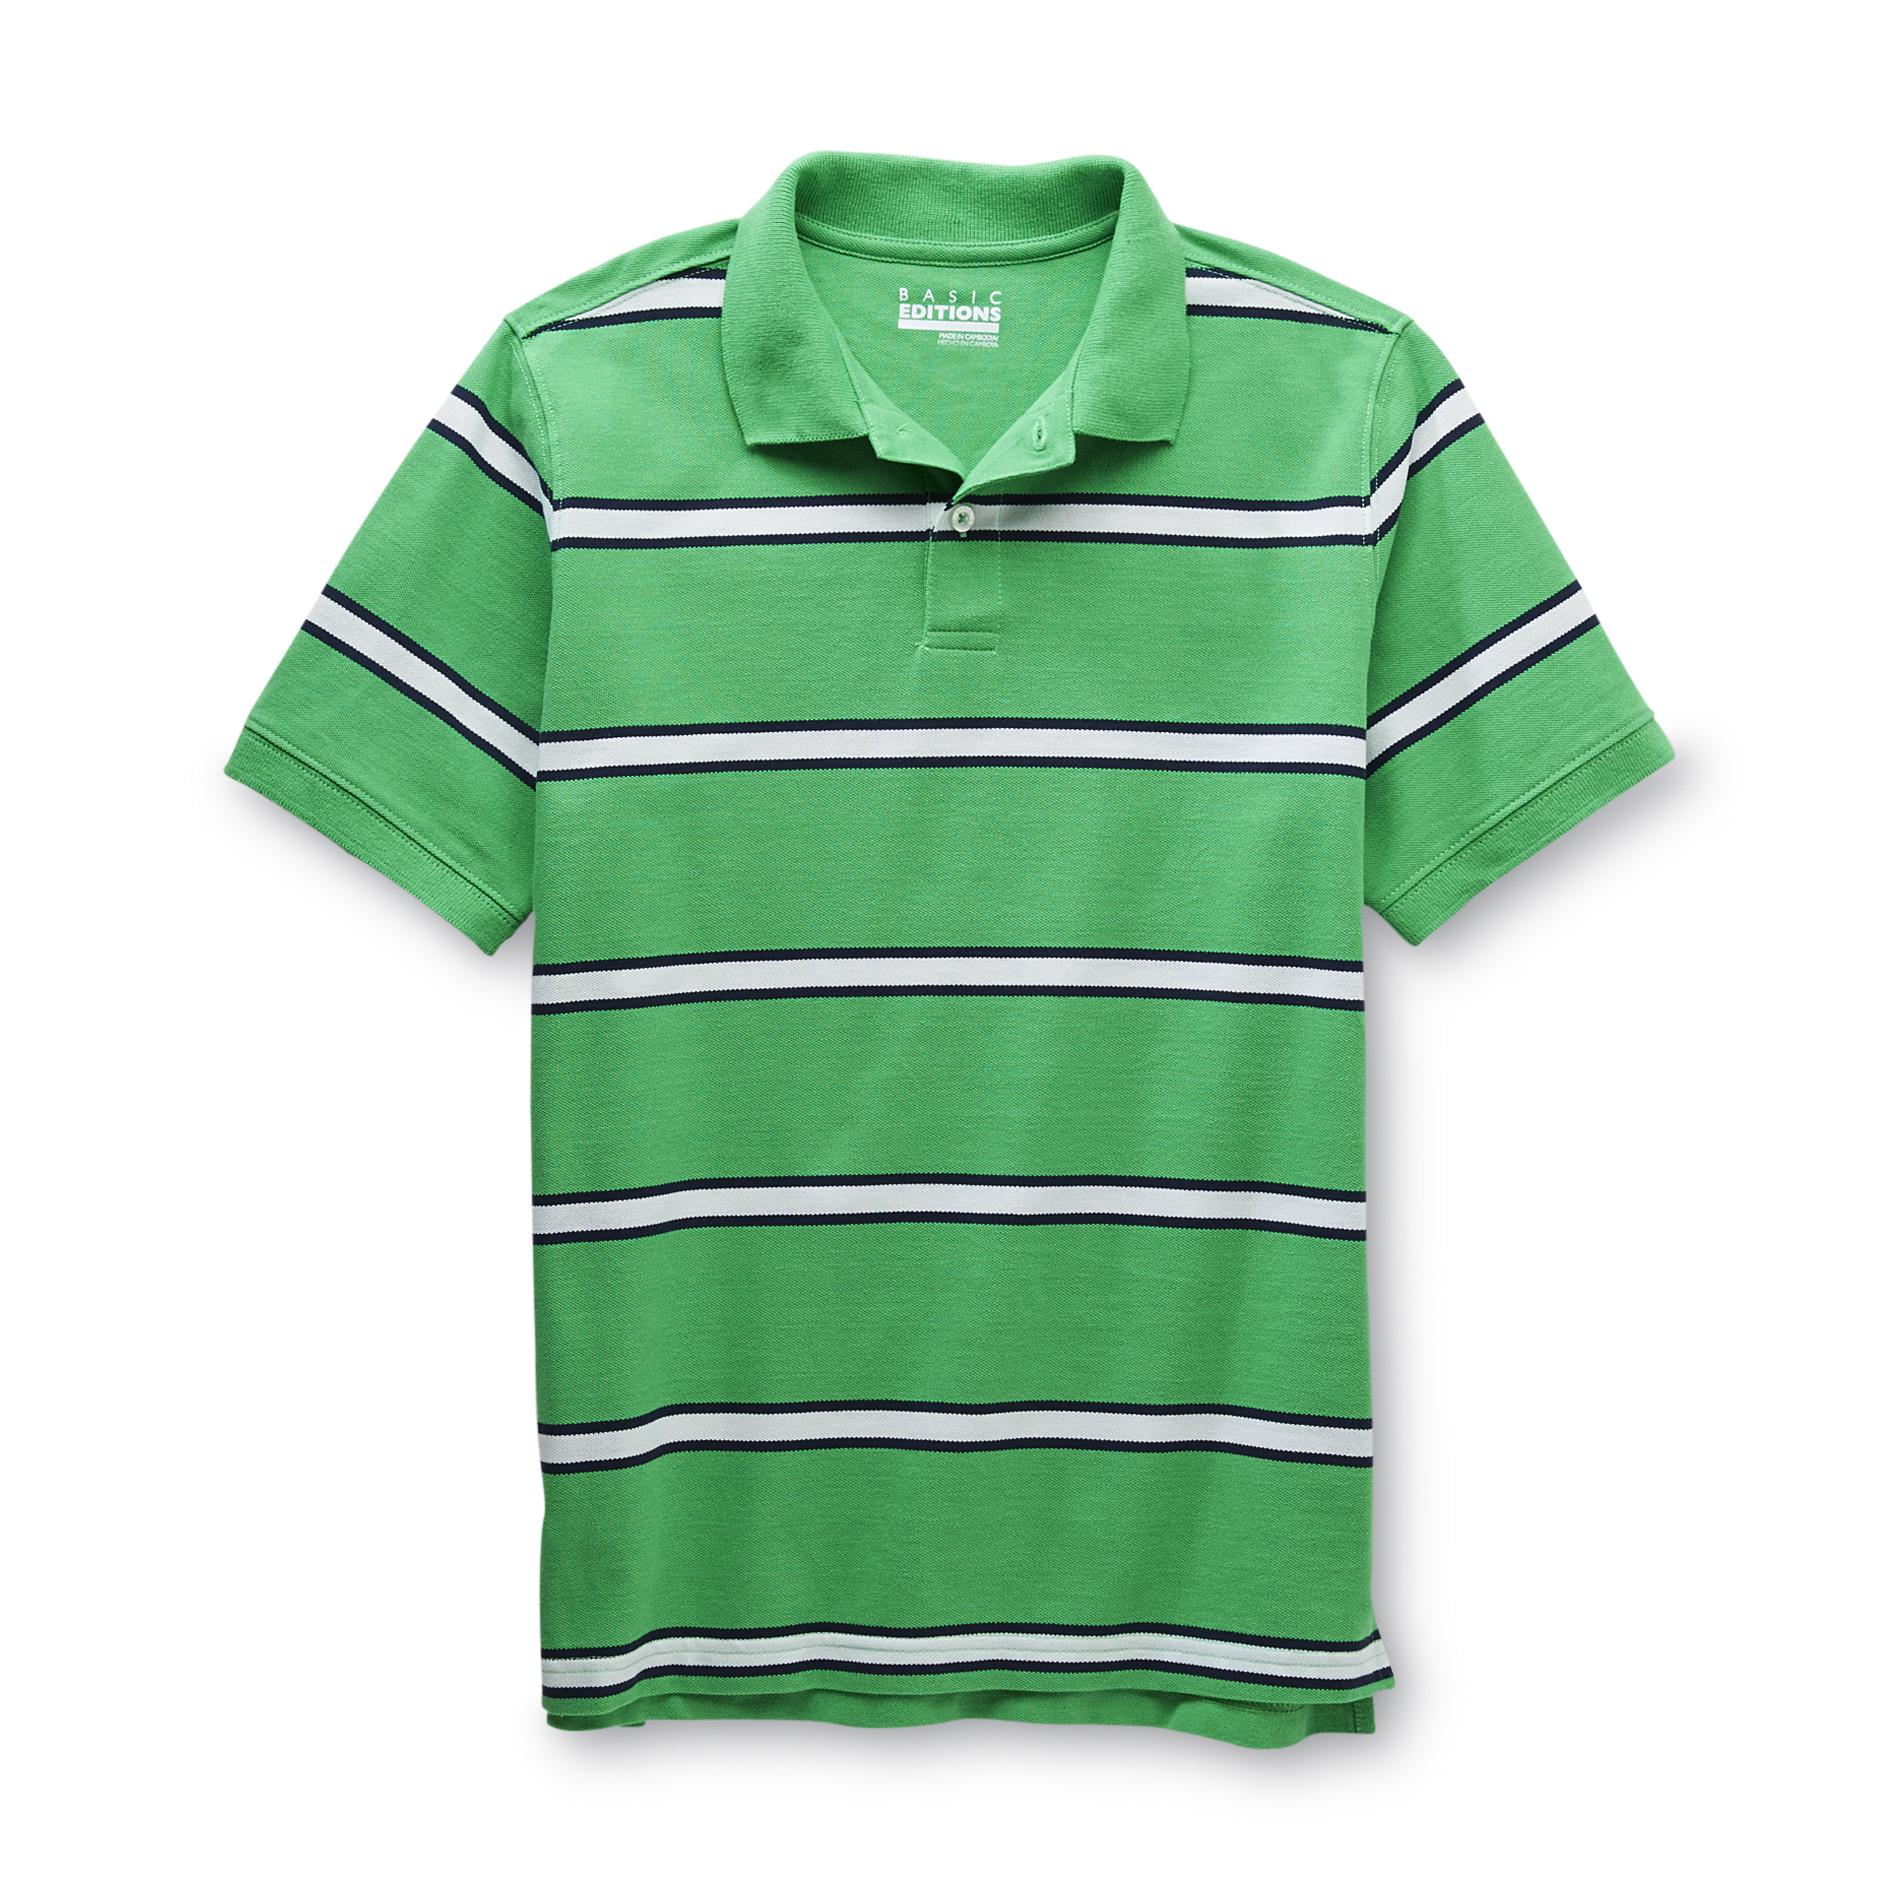 Basic Editions Boy's Pique Polo Shirt - Striped